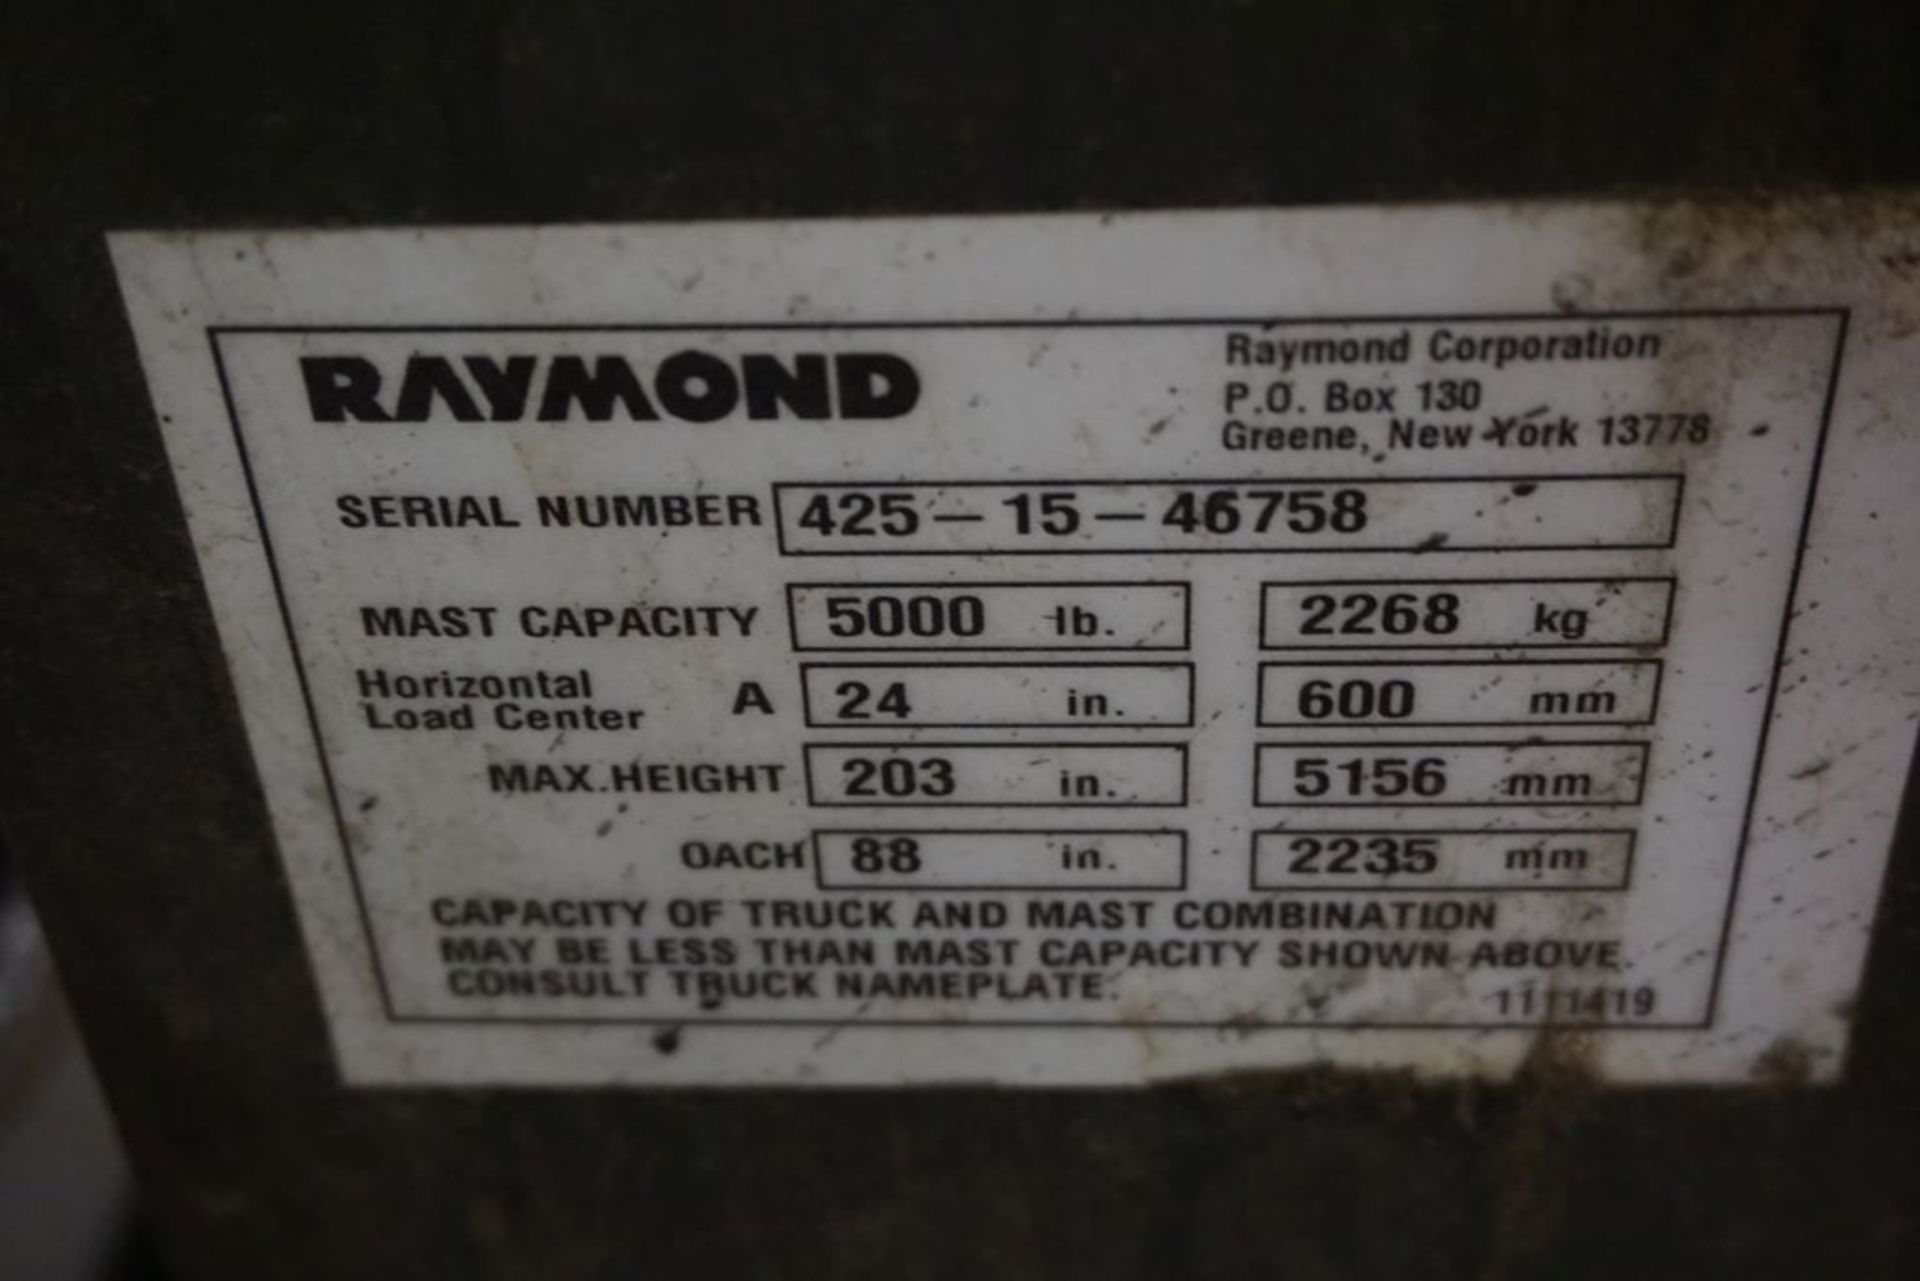 Raymond 425 C40TT Docker Stand Up Electric Forklift - Model No. 425-C40TT; Serial No. 425-15- - Image 11 of 17